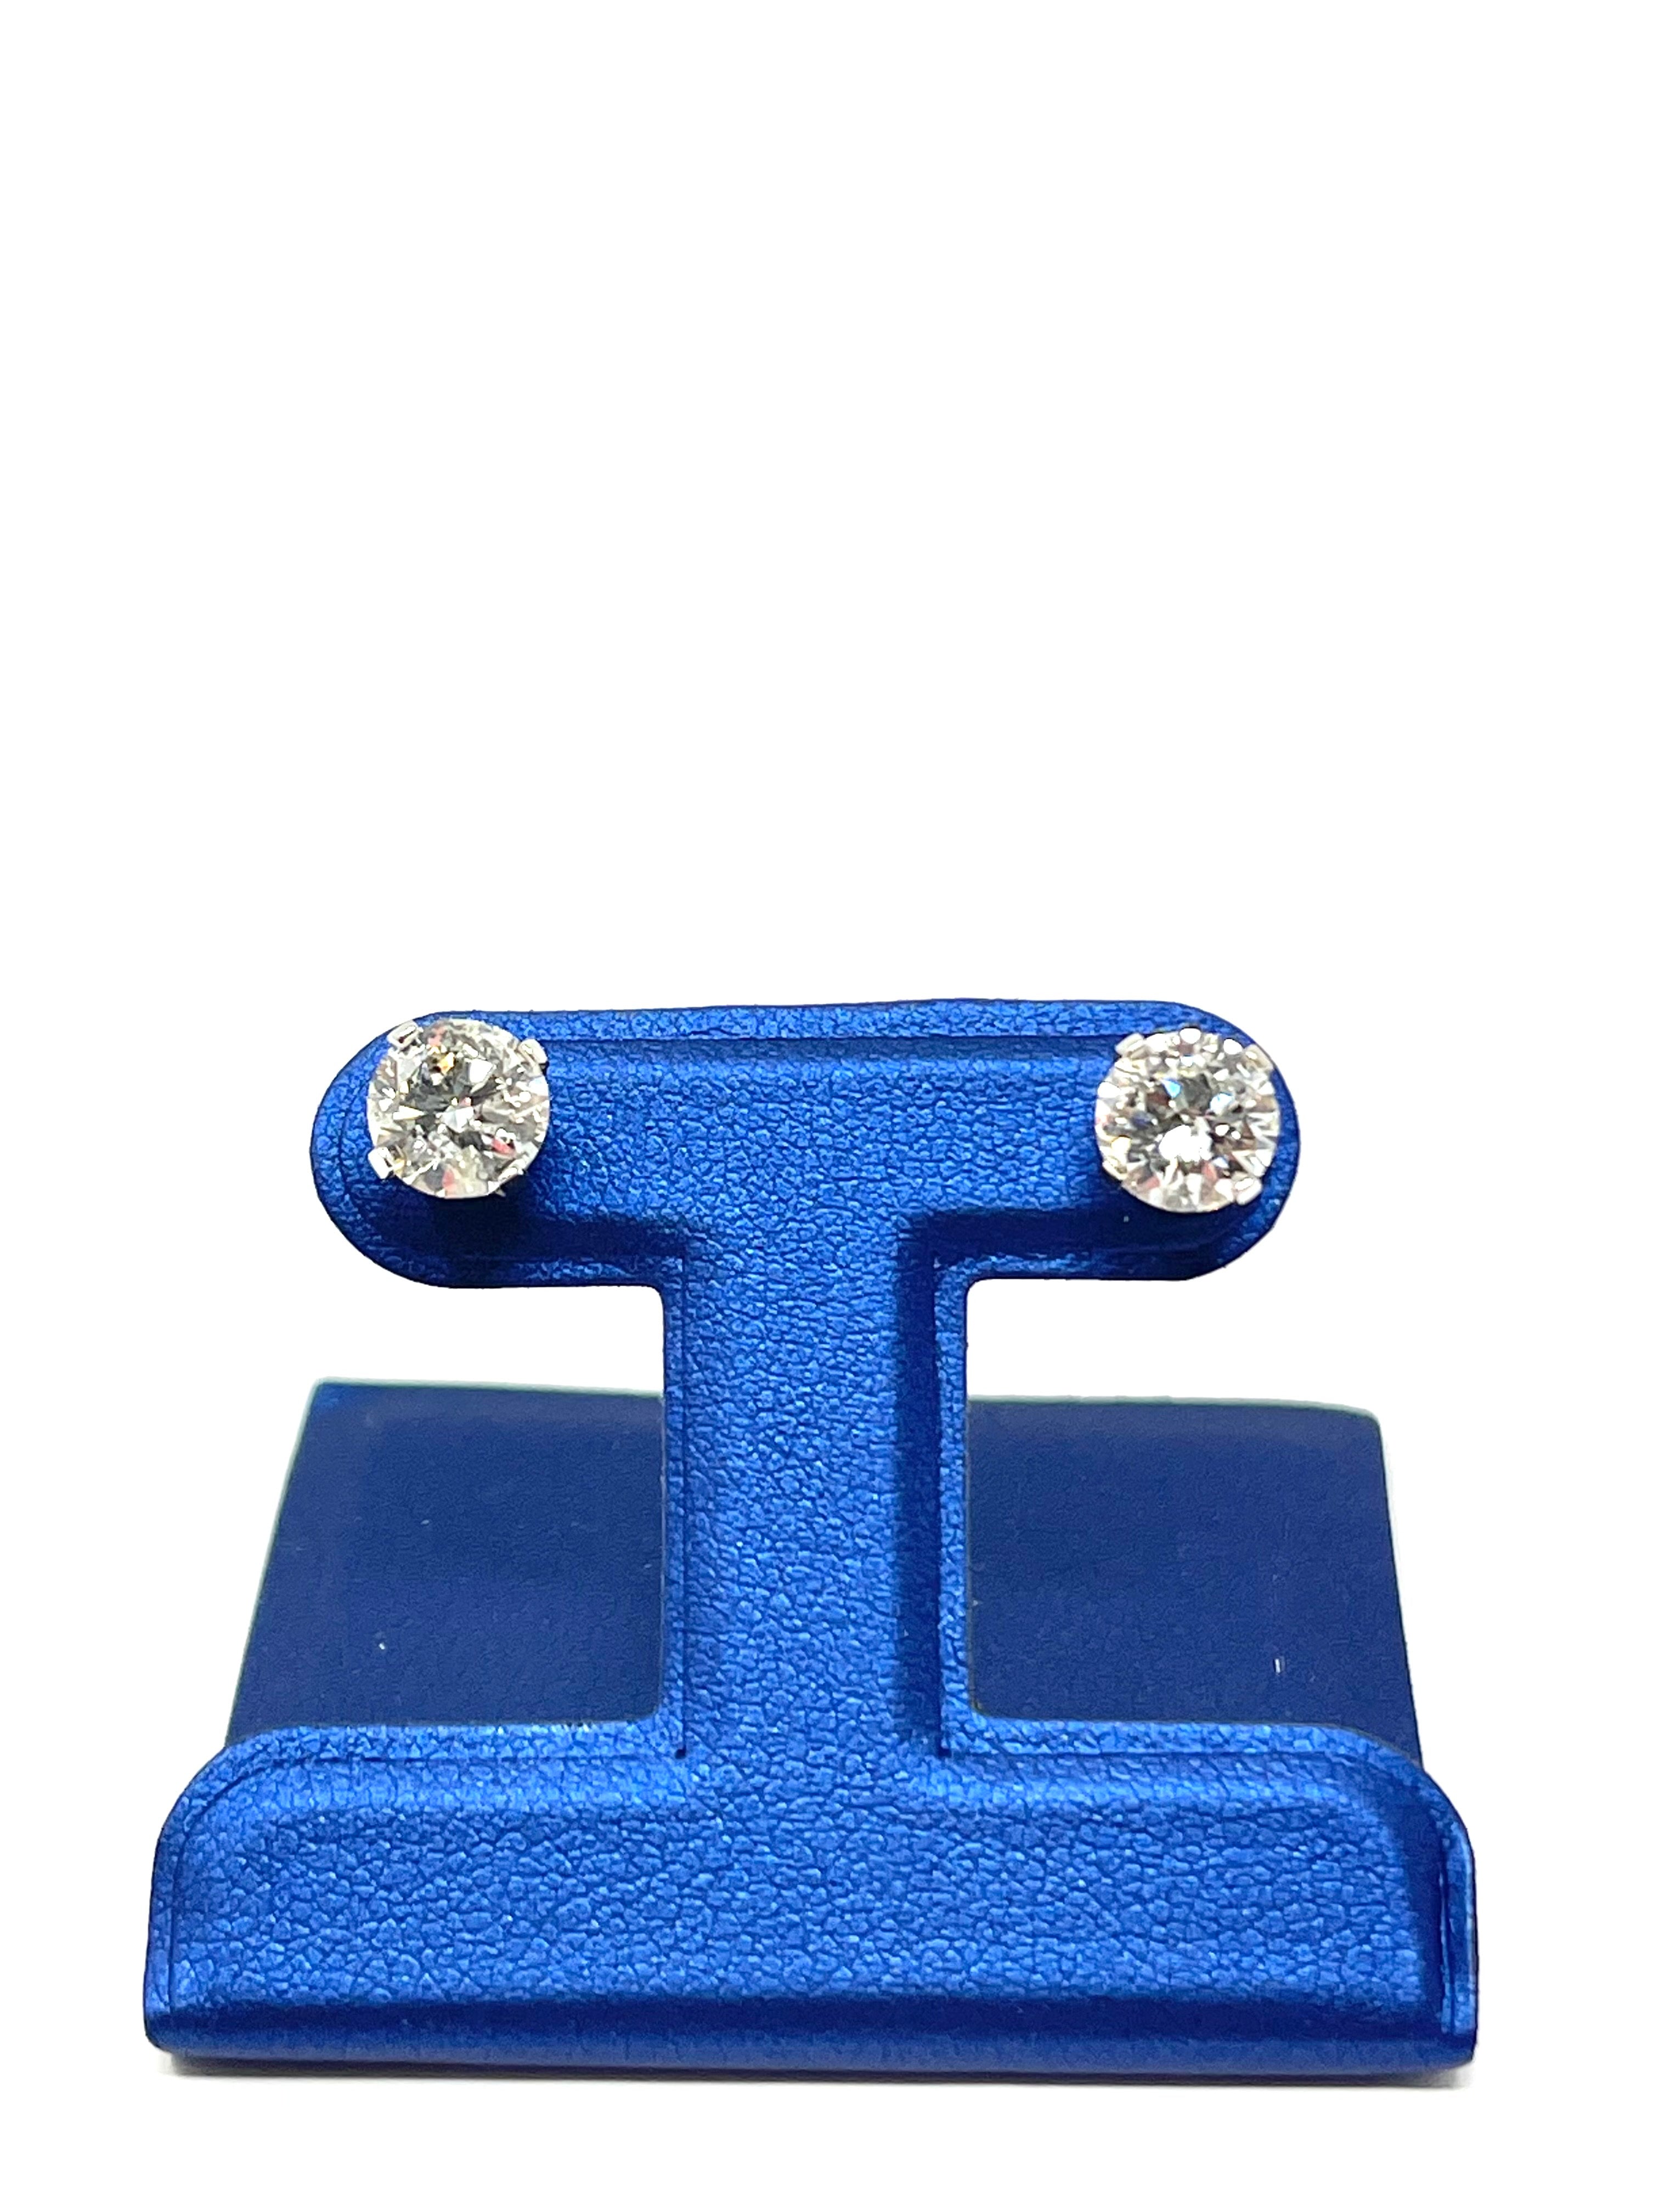 14K White Gold Solitaire 1.5 Cttw Diamond Earring